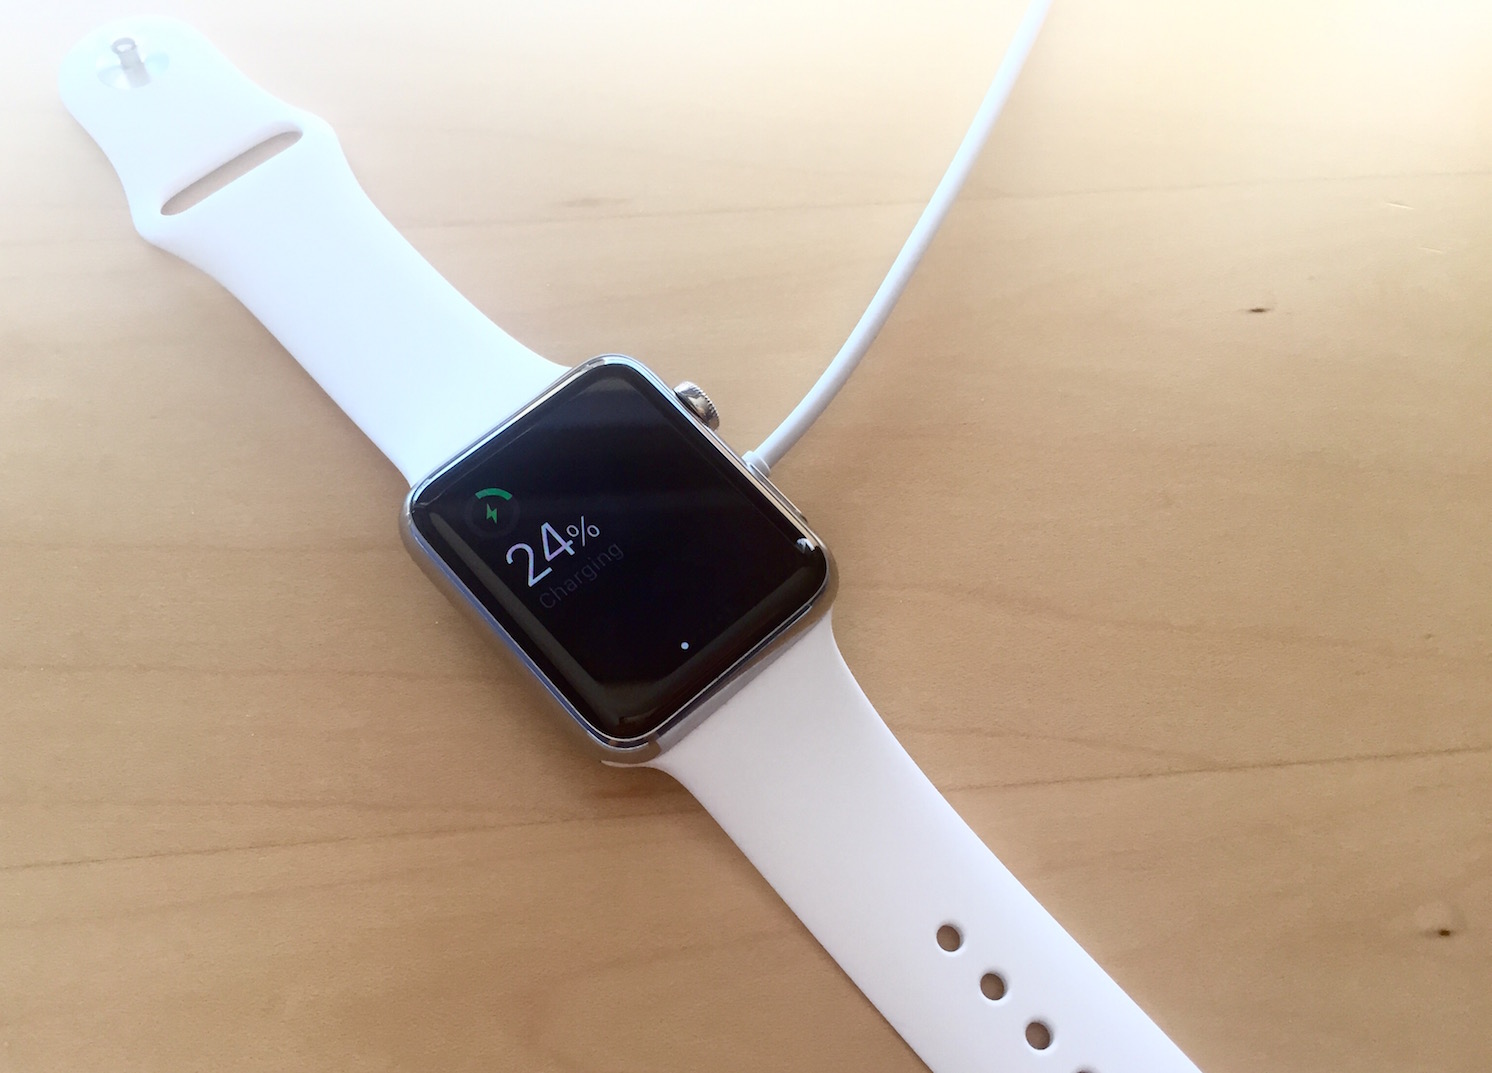 Apple Watch charging on desk